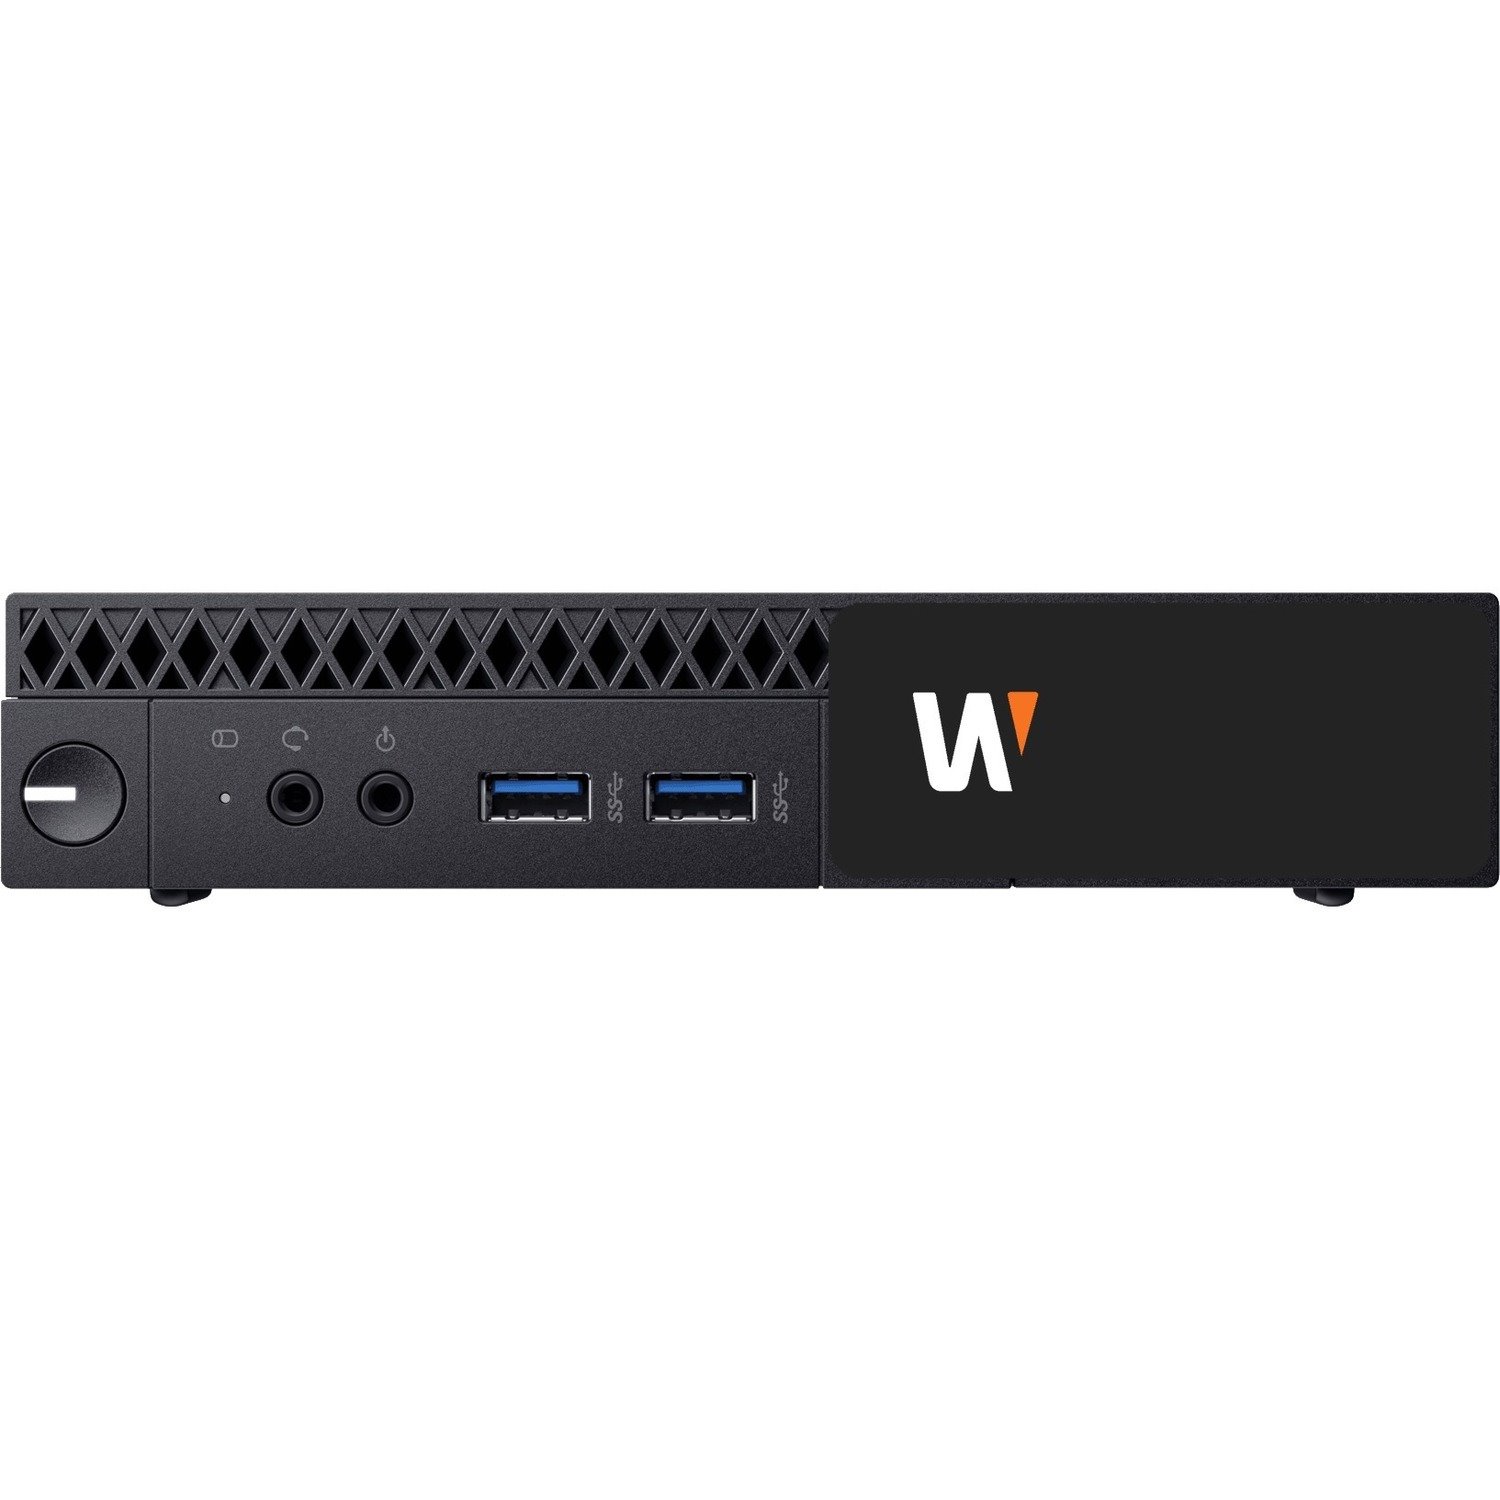 Wisenet WAVE Recording Server - 2 TB HDD